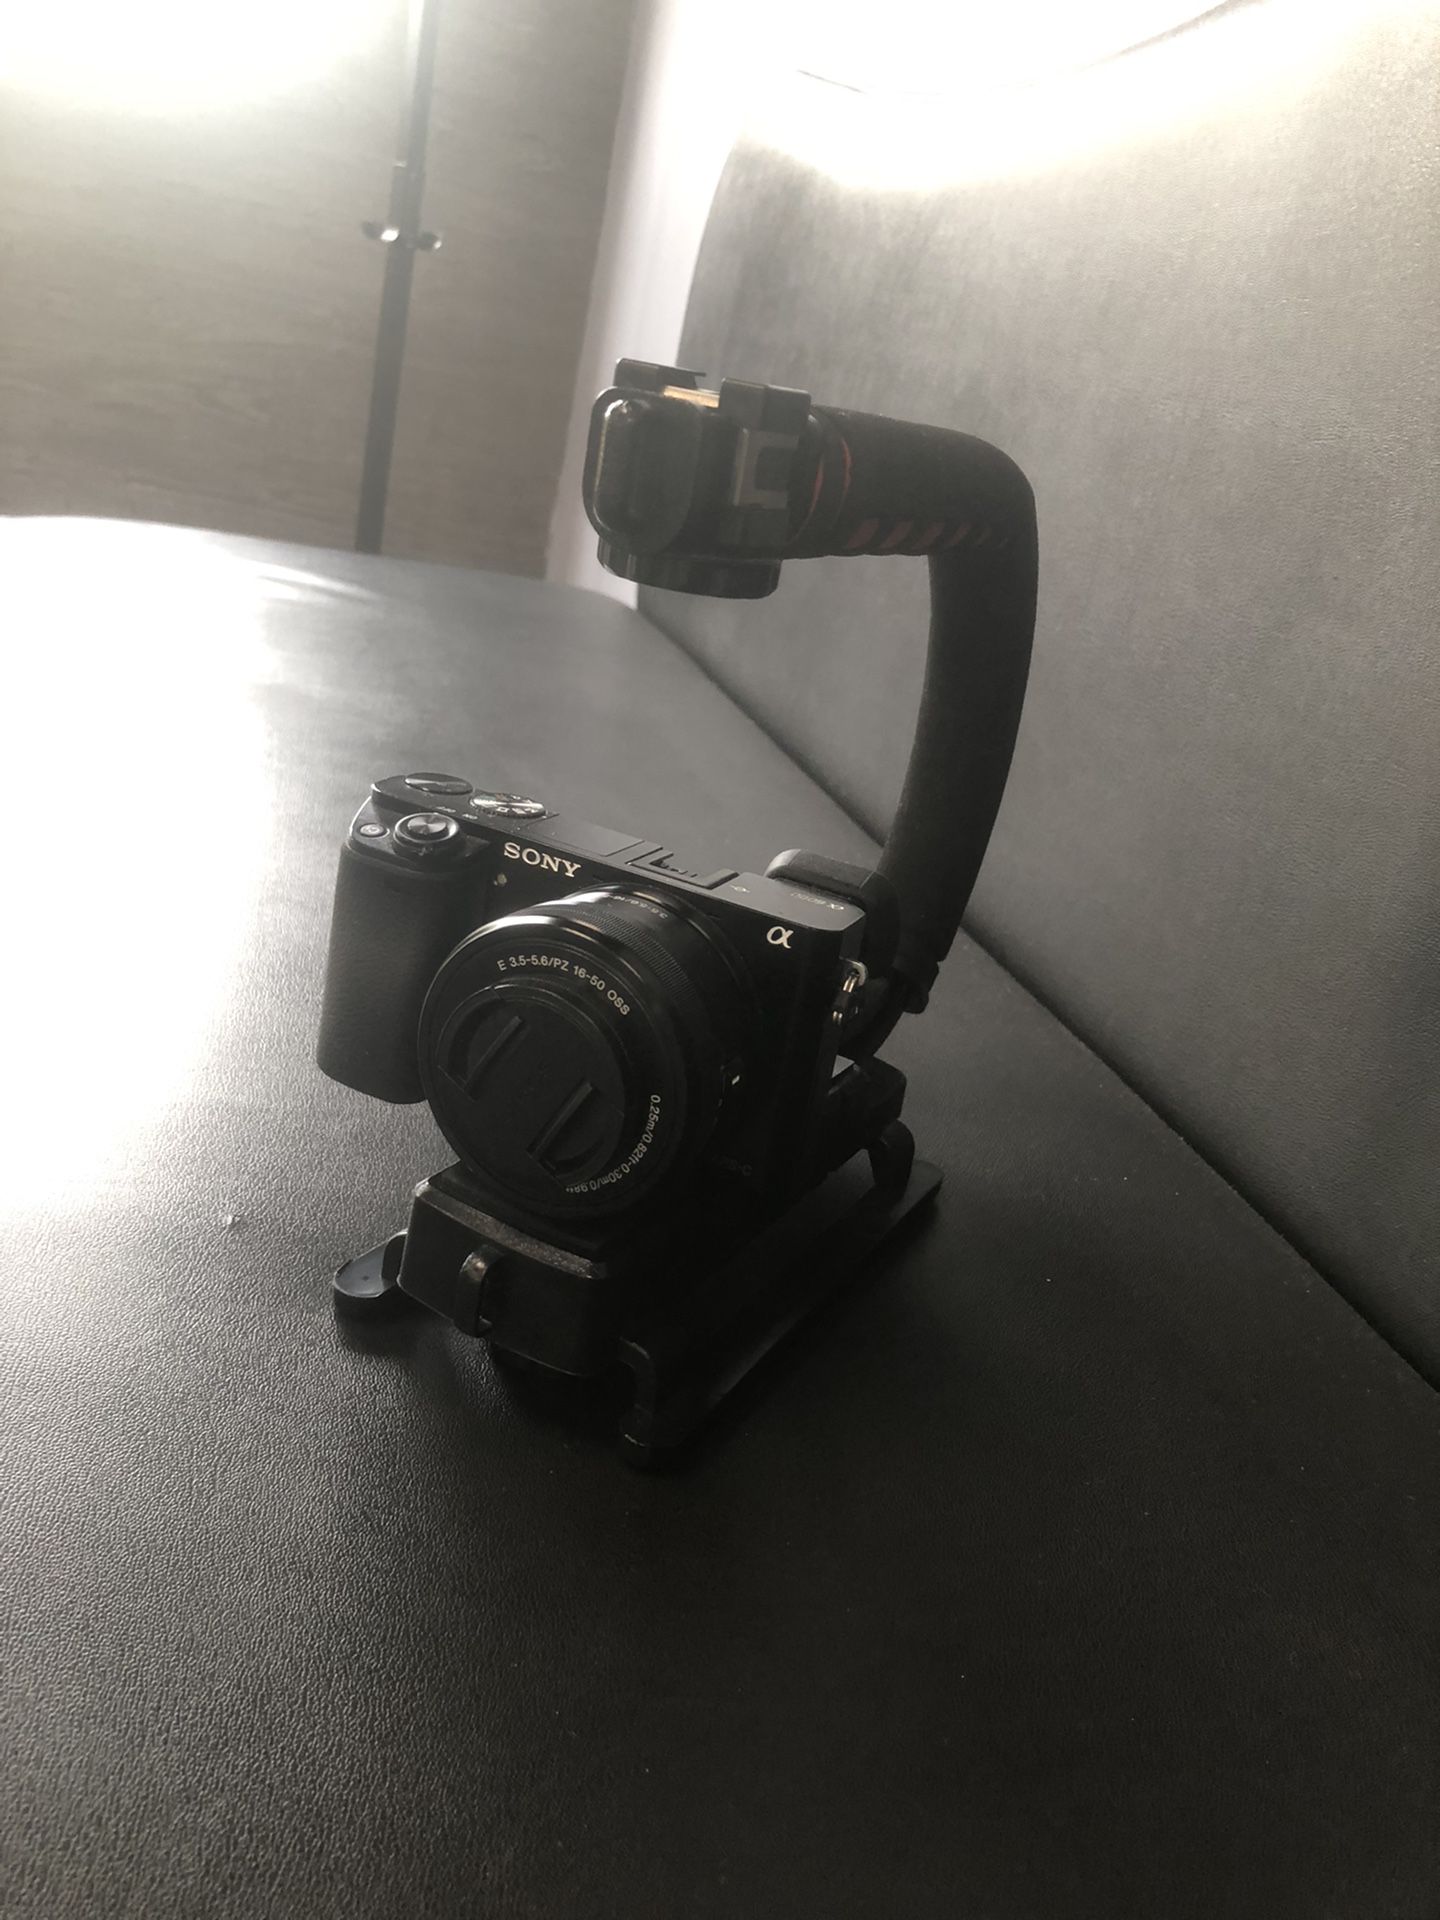 Camera Equipment 